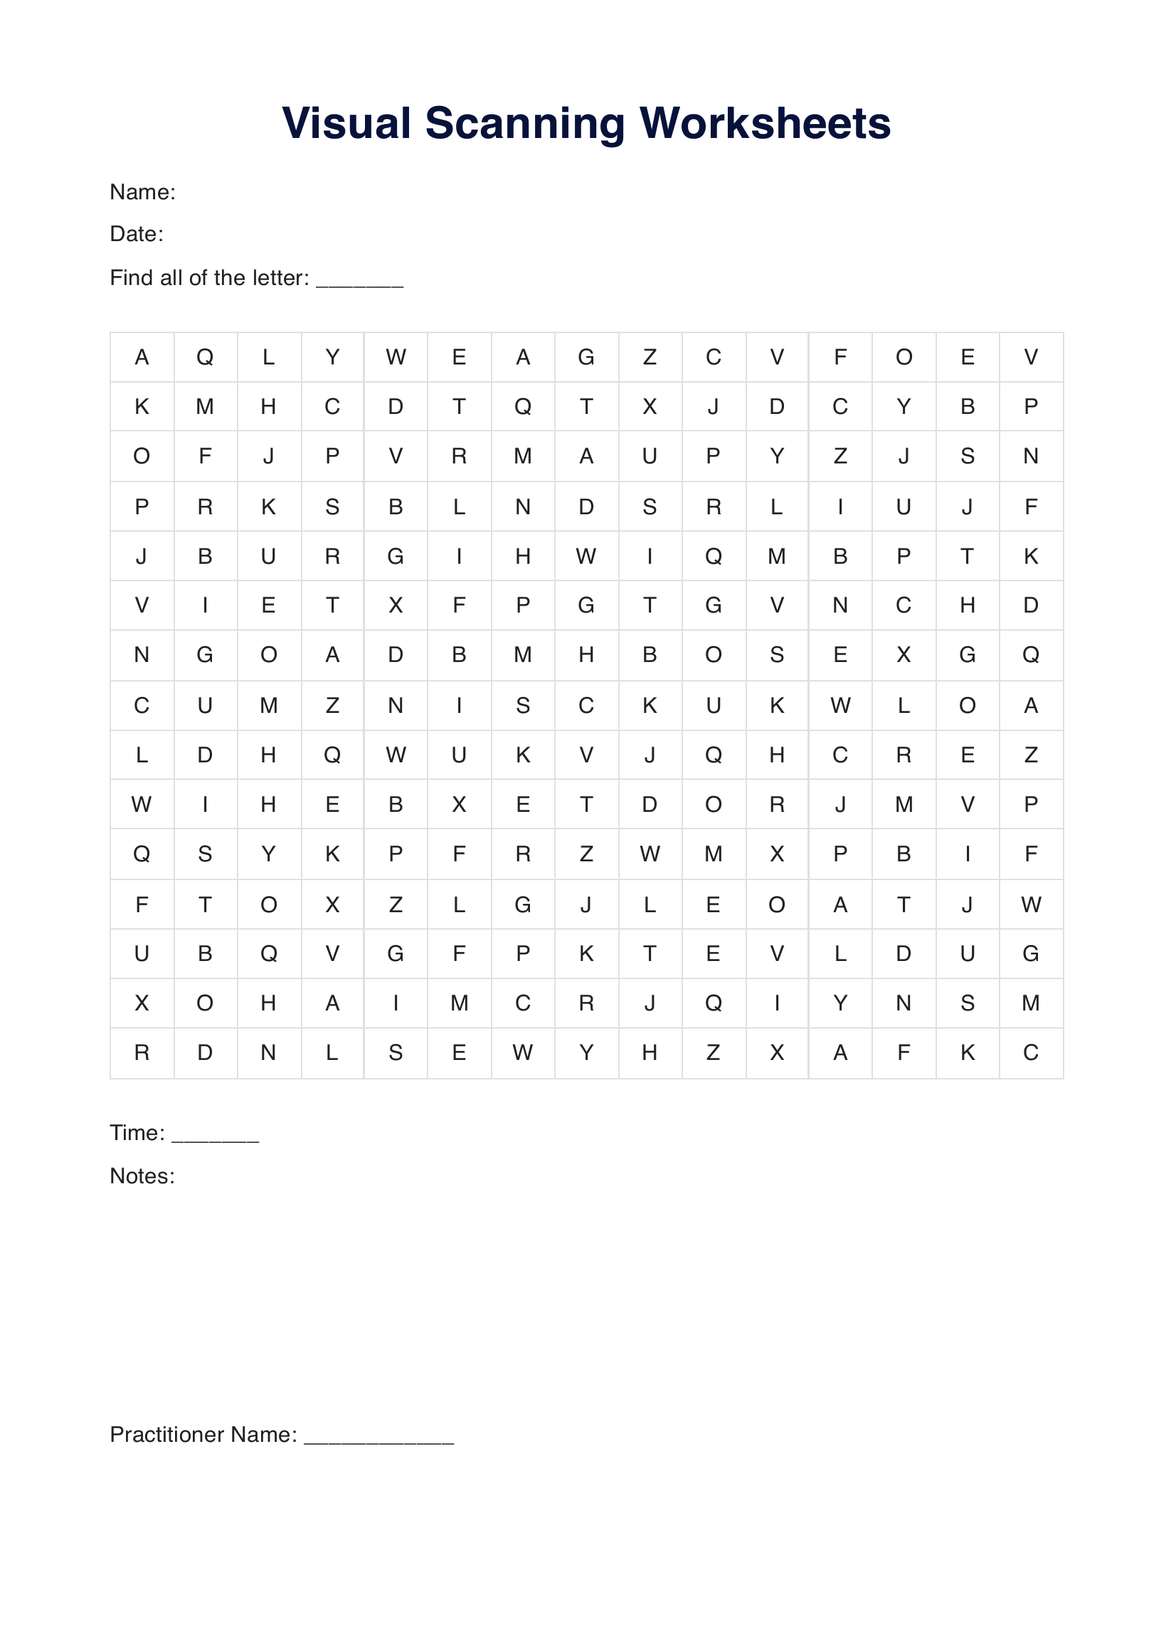 Visual Scanning Worksheet PDF Example